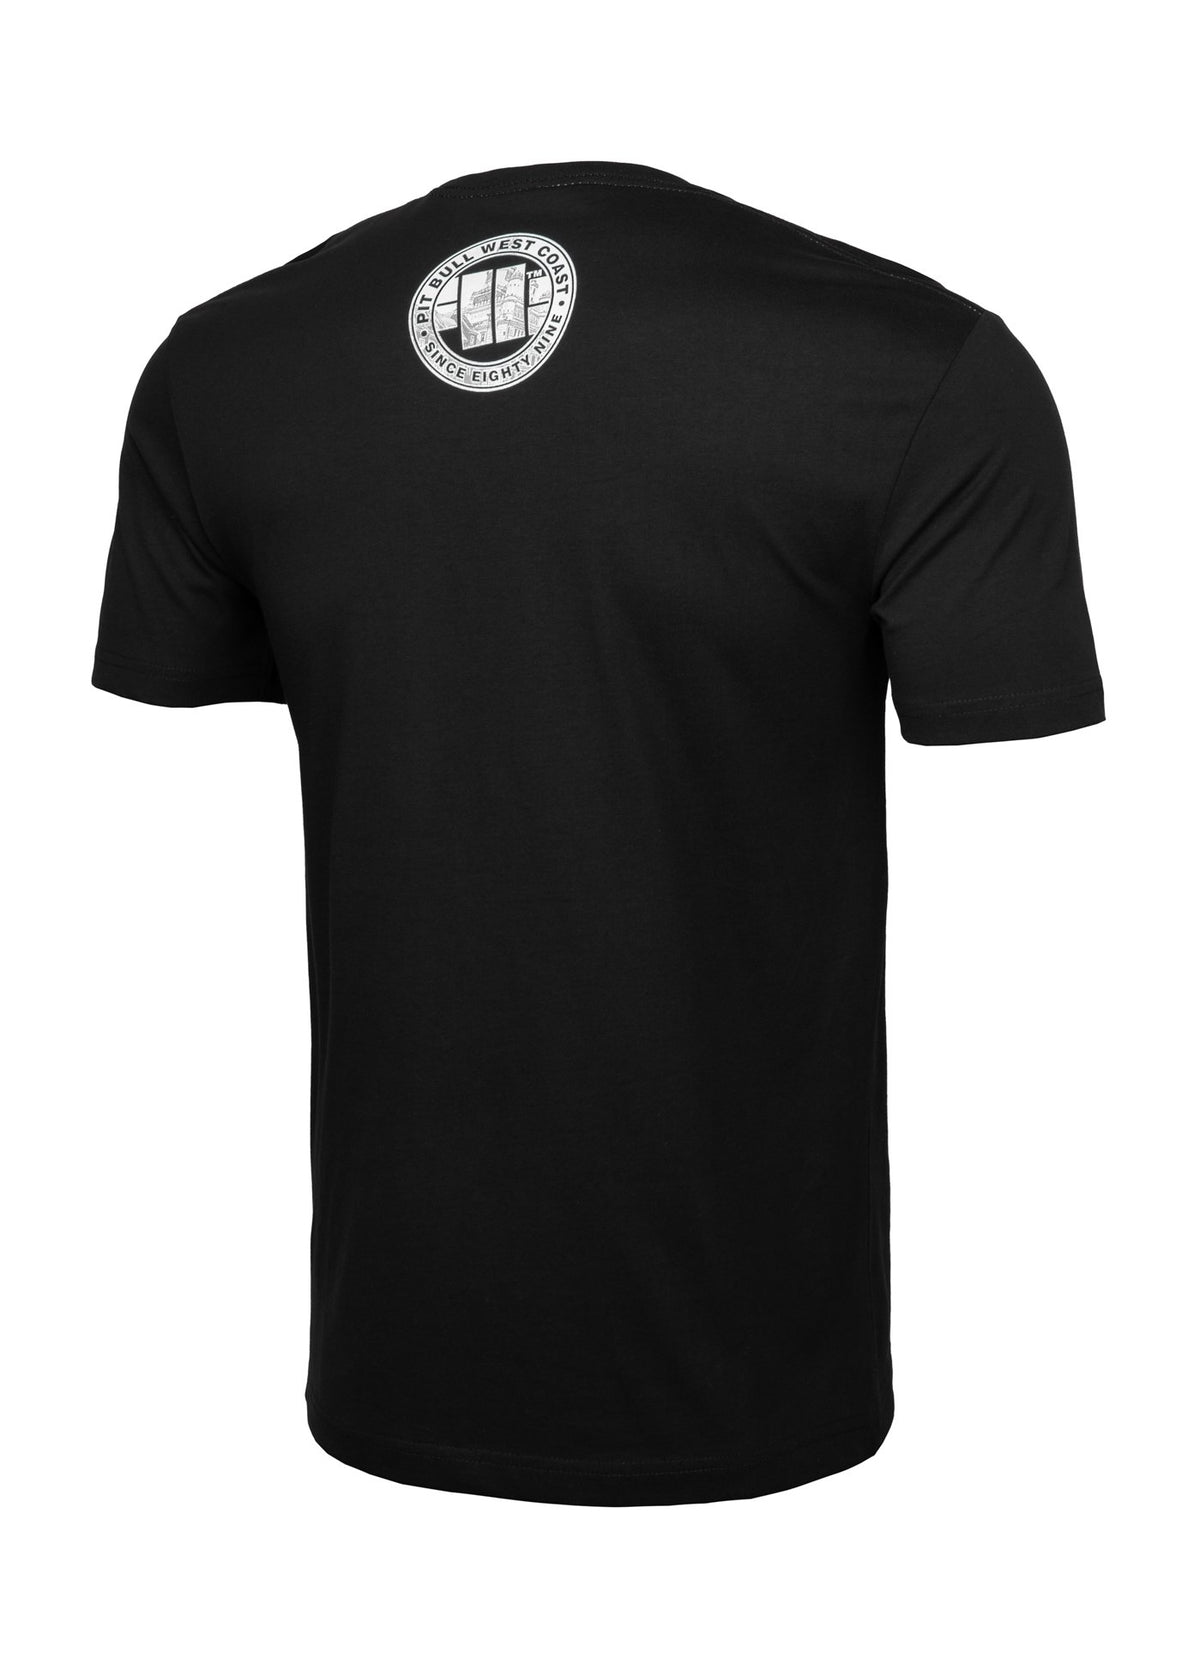 T-shirt CLASSIC BOXING POZNAŃ Black - Pitbull West Coast U.S.A. 